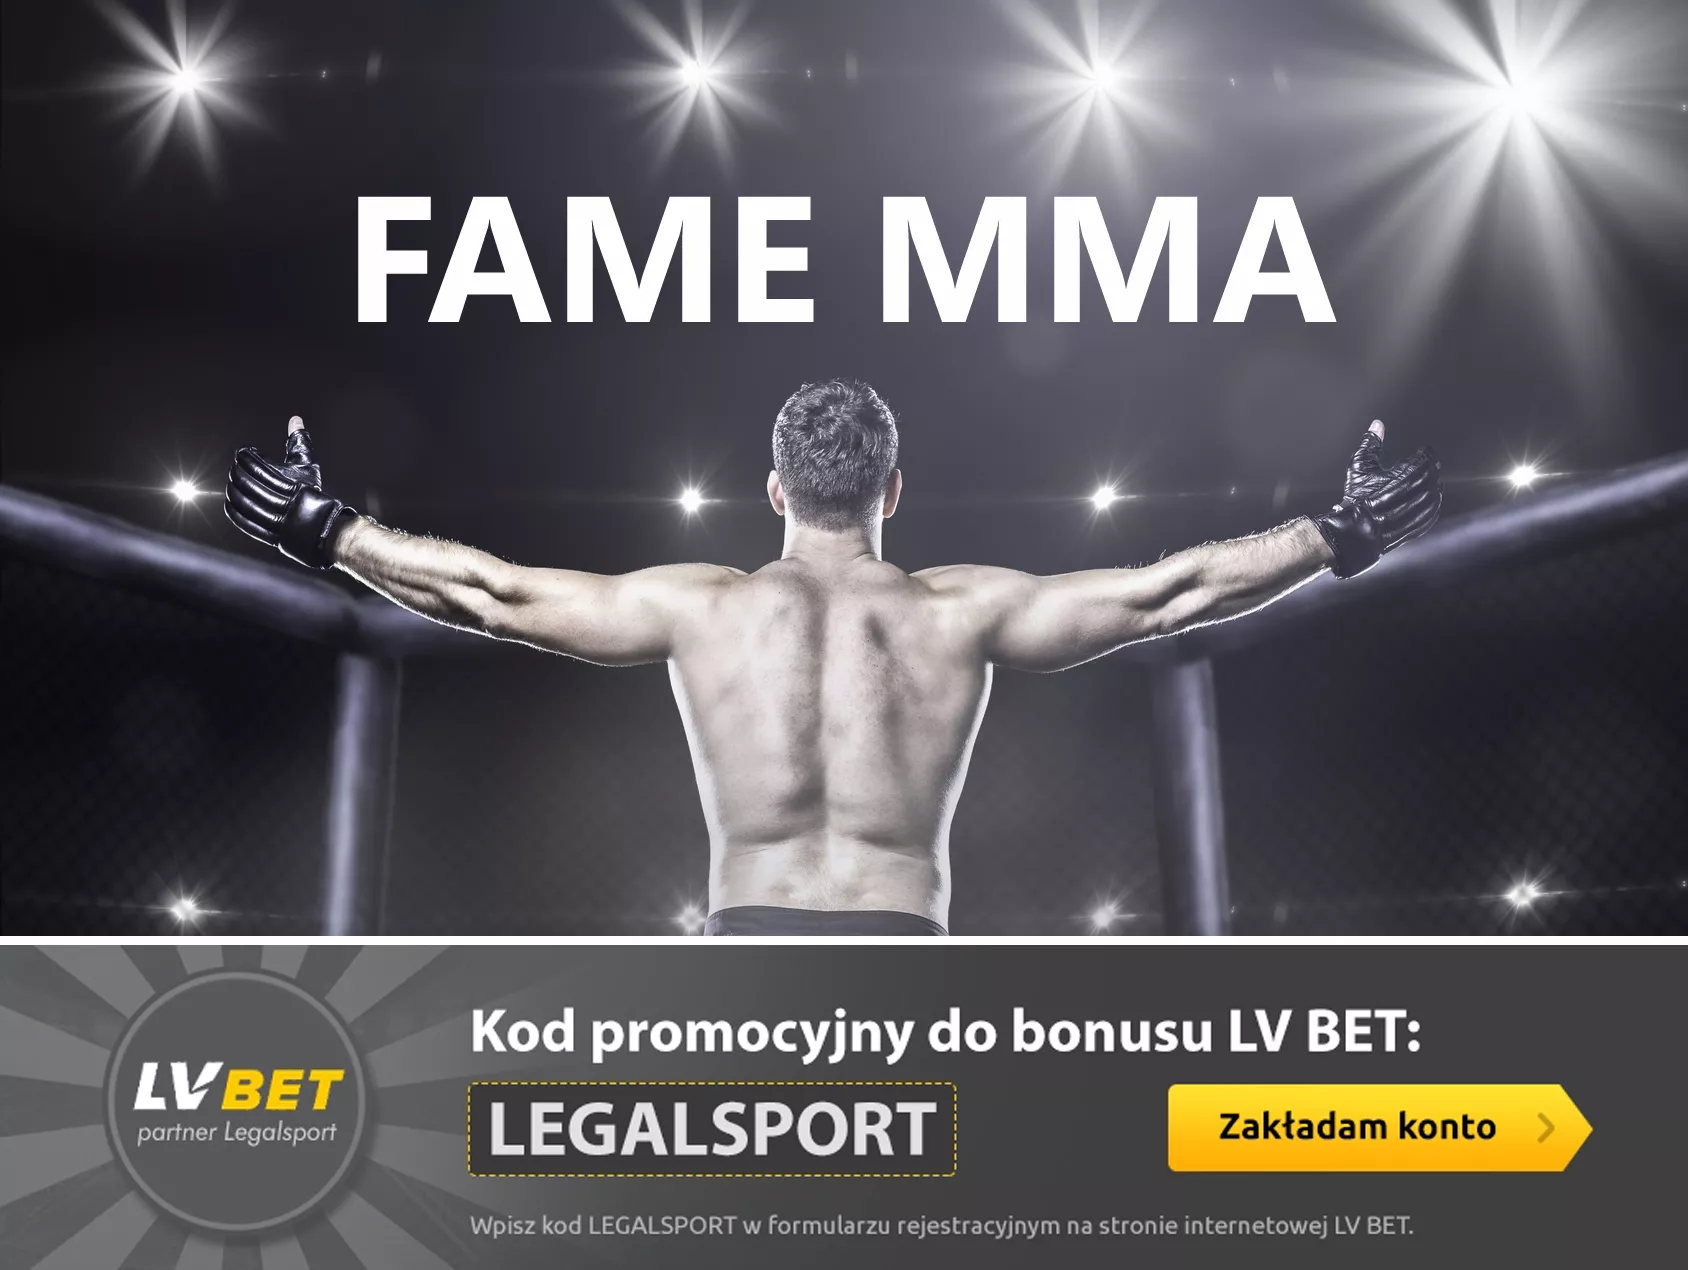 LVBET sponsoruje FAME MMA - specjalne bonusy z kodem promocyjnym